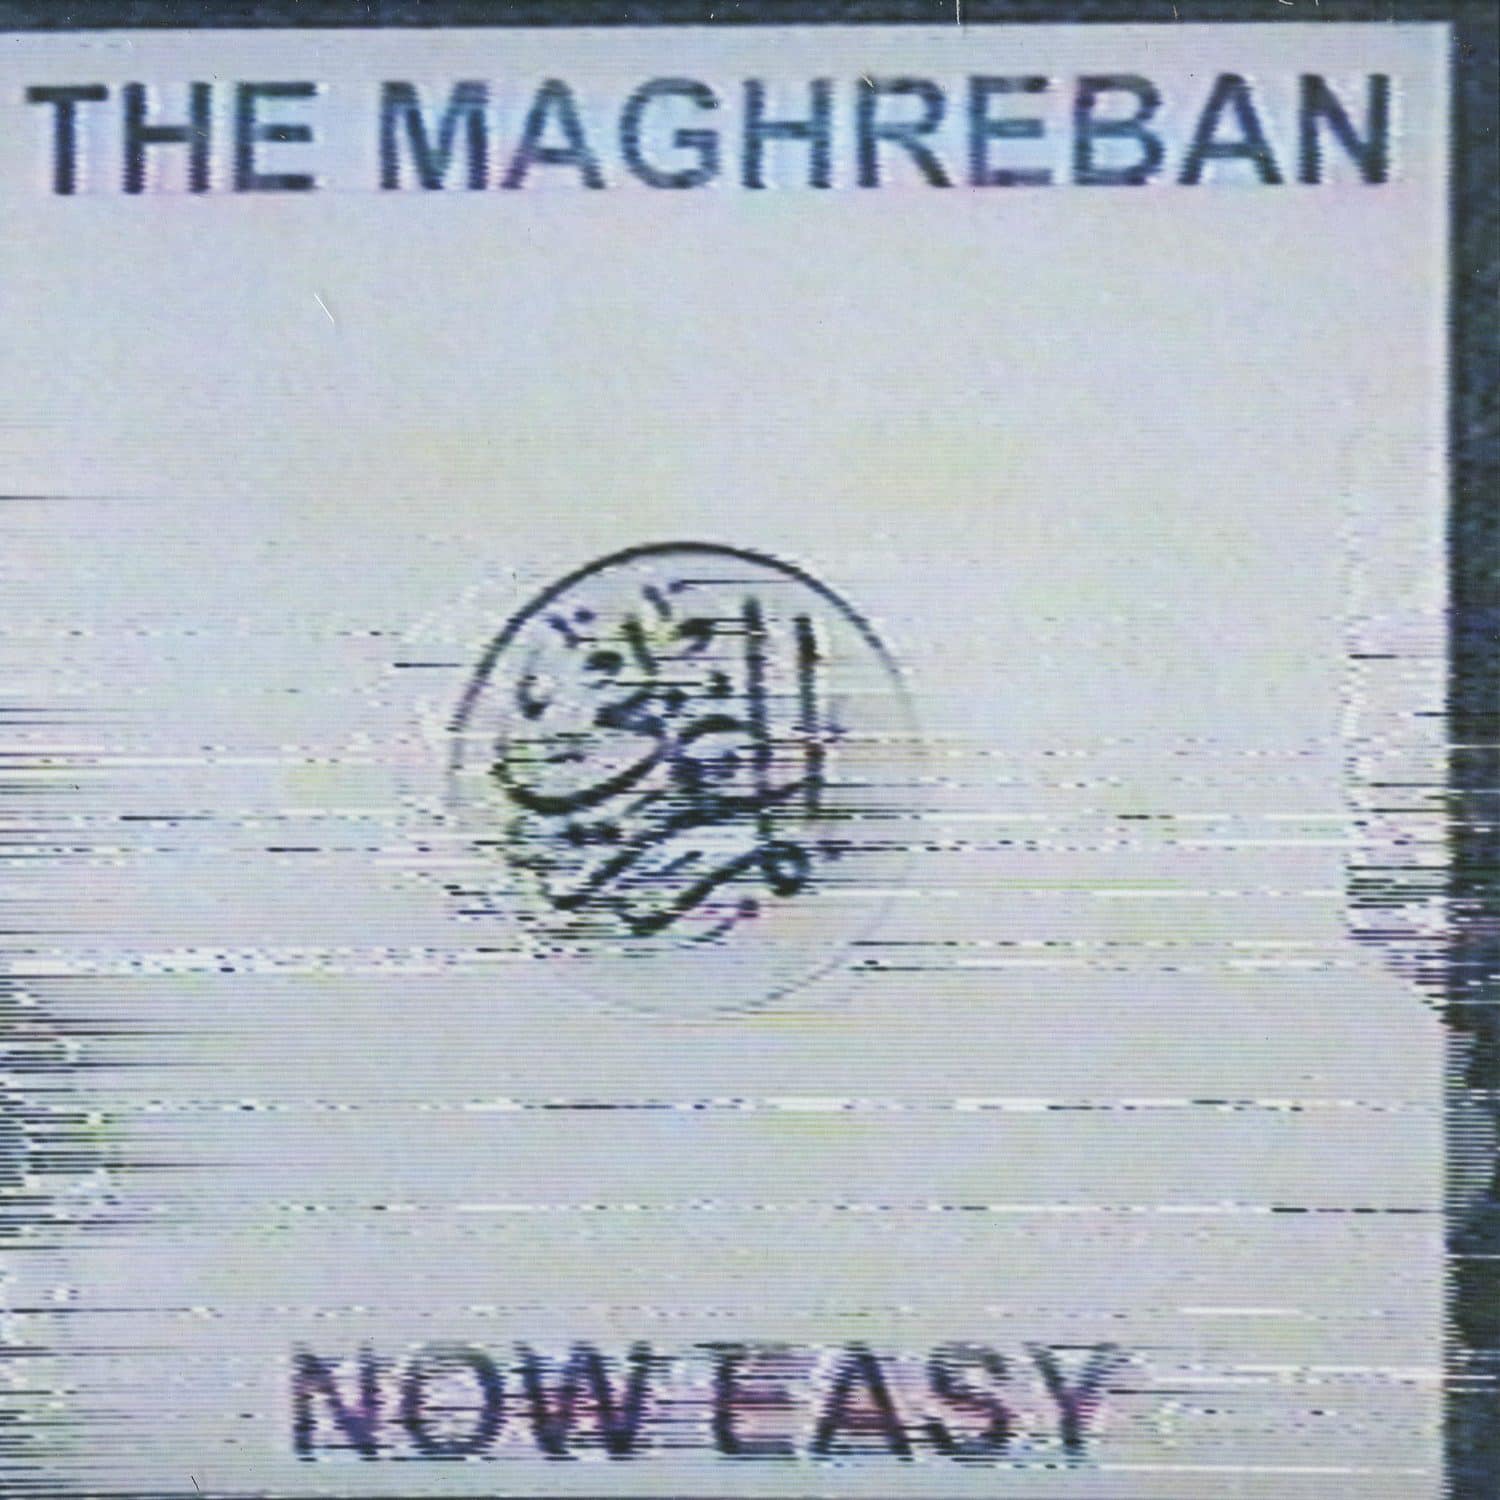 The Maghreban - NOW EASY